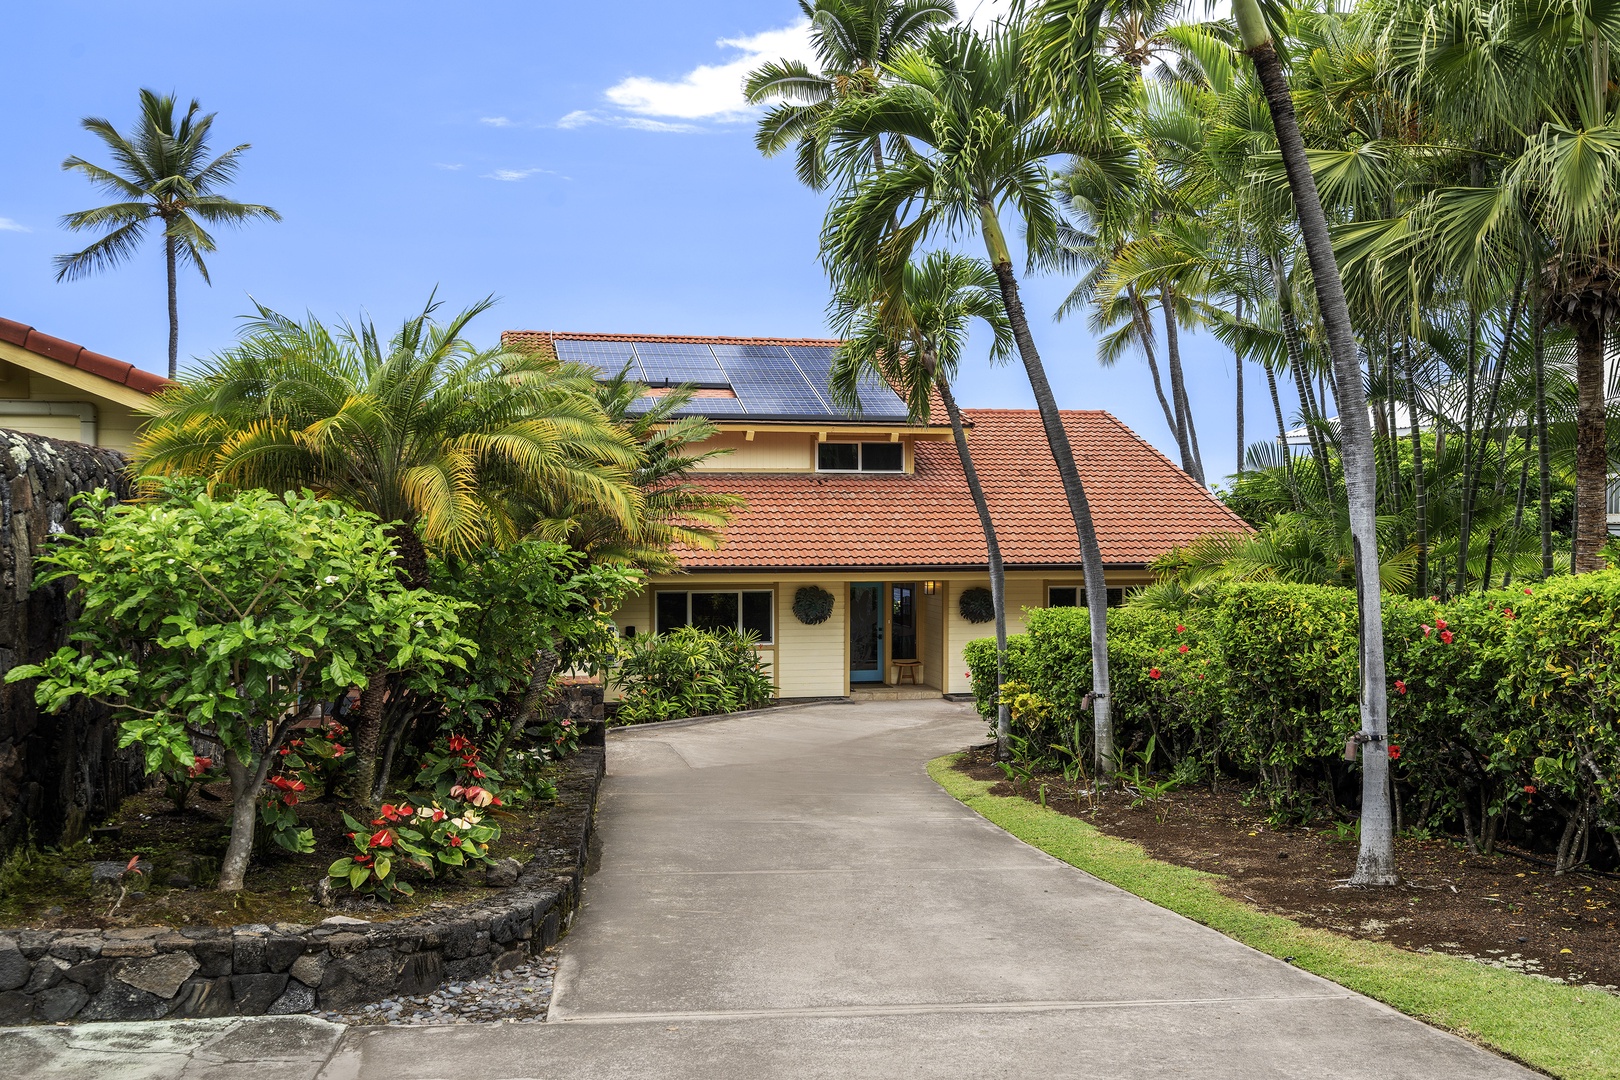 Kailua Kona Vacation Rentals, Hale Pua - Spacious driveway capable of accommodating 5 cars